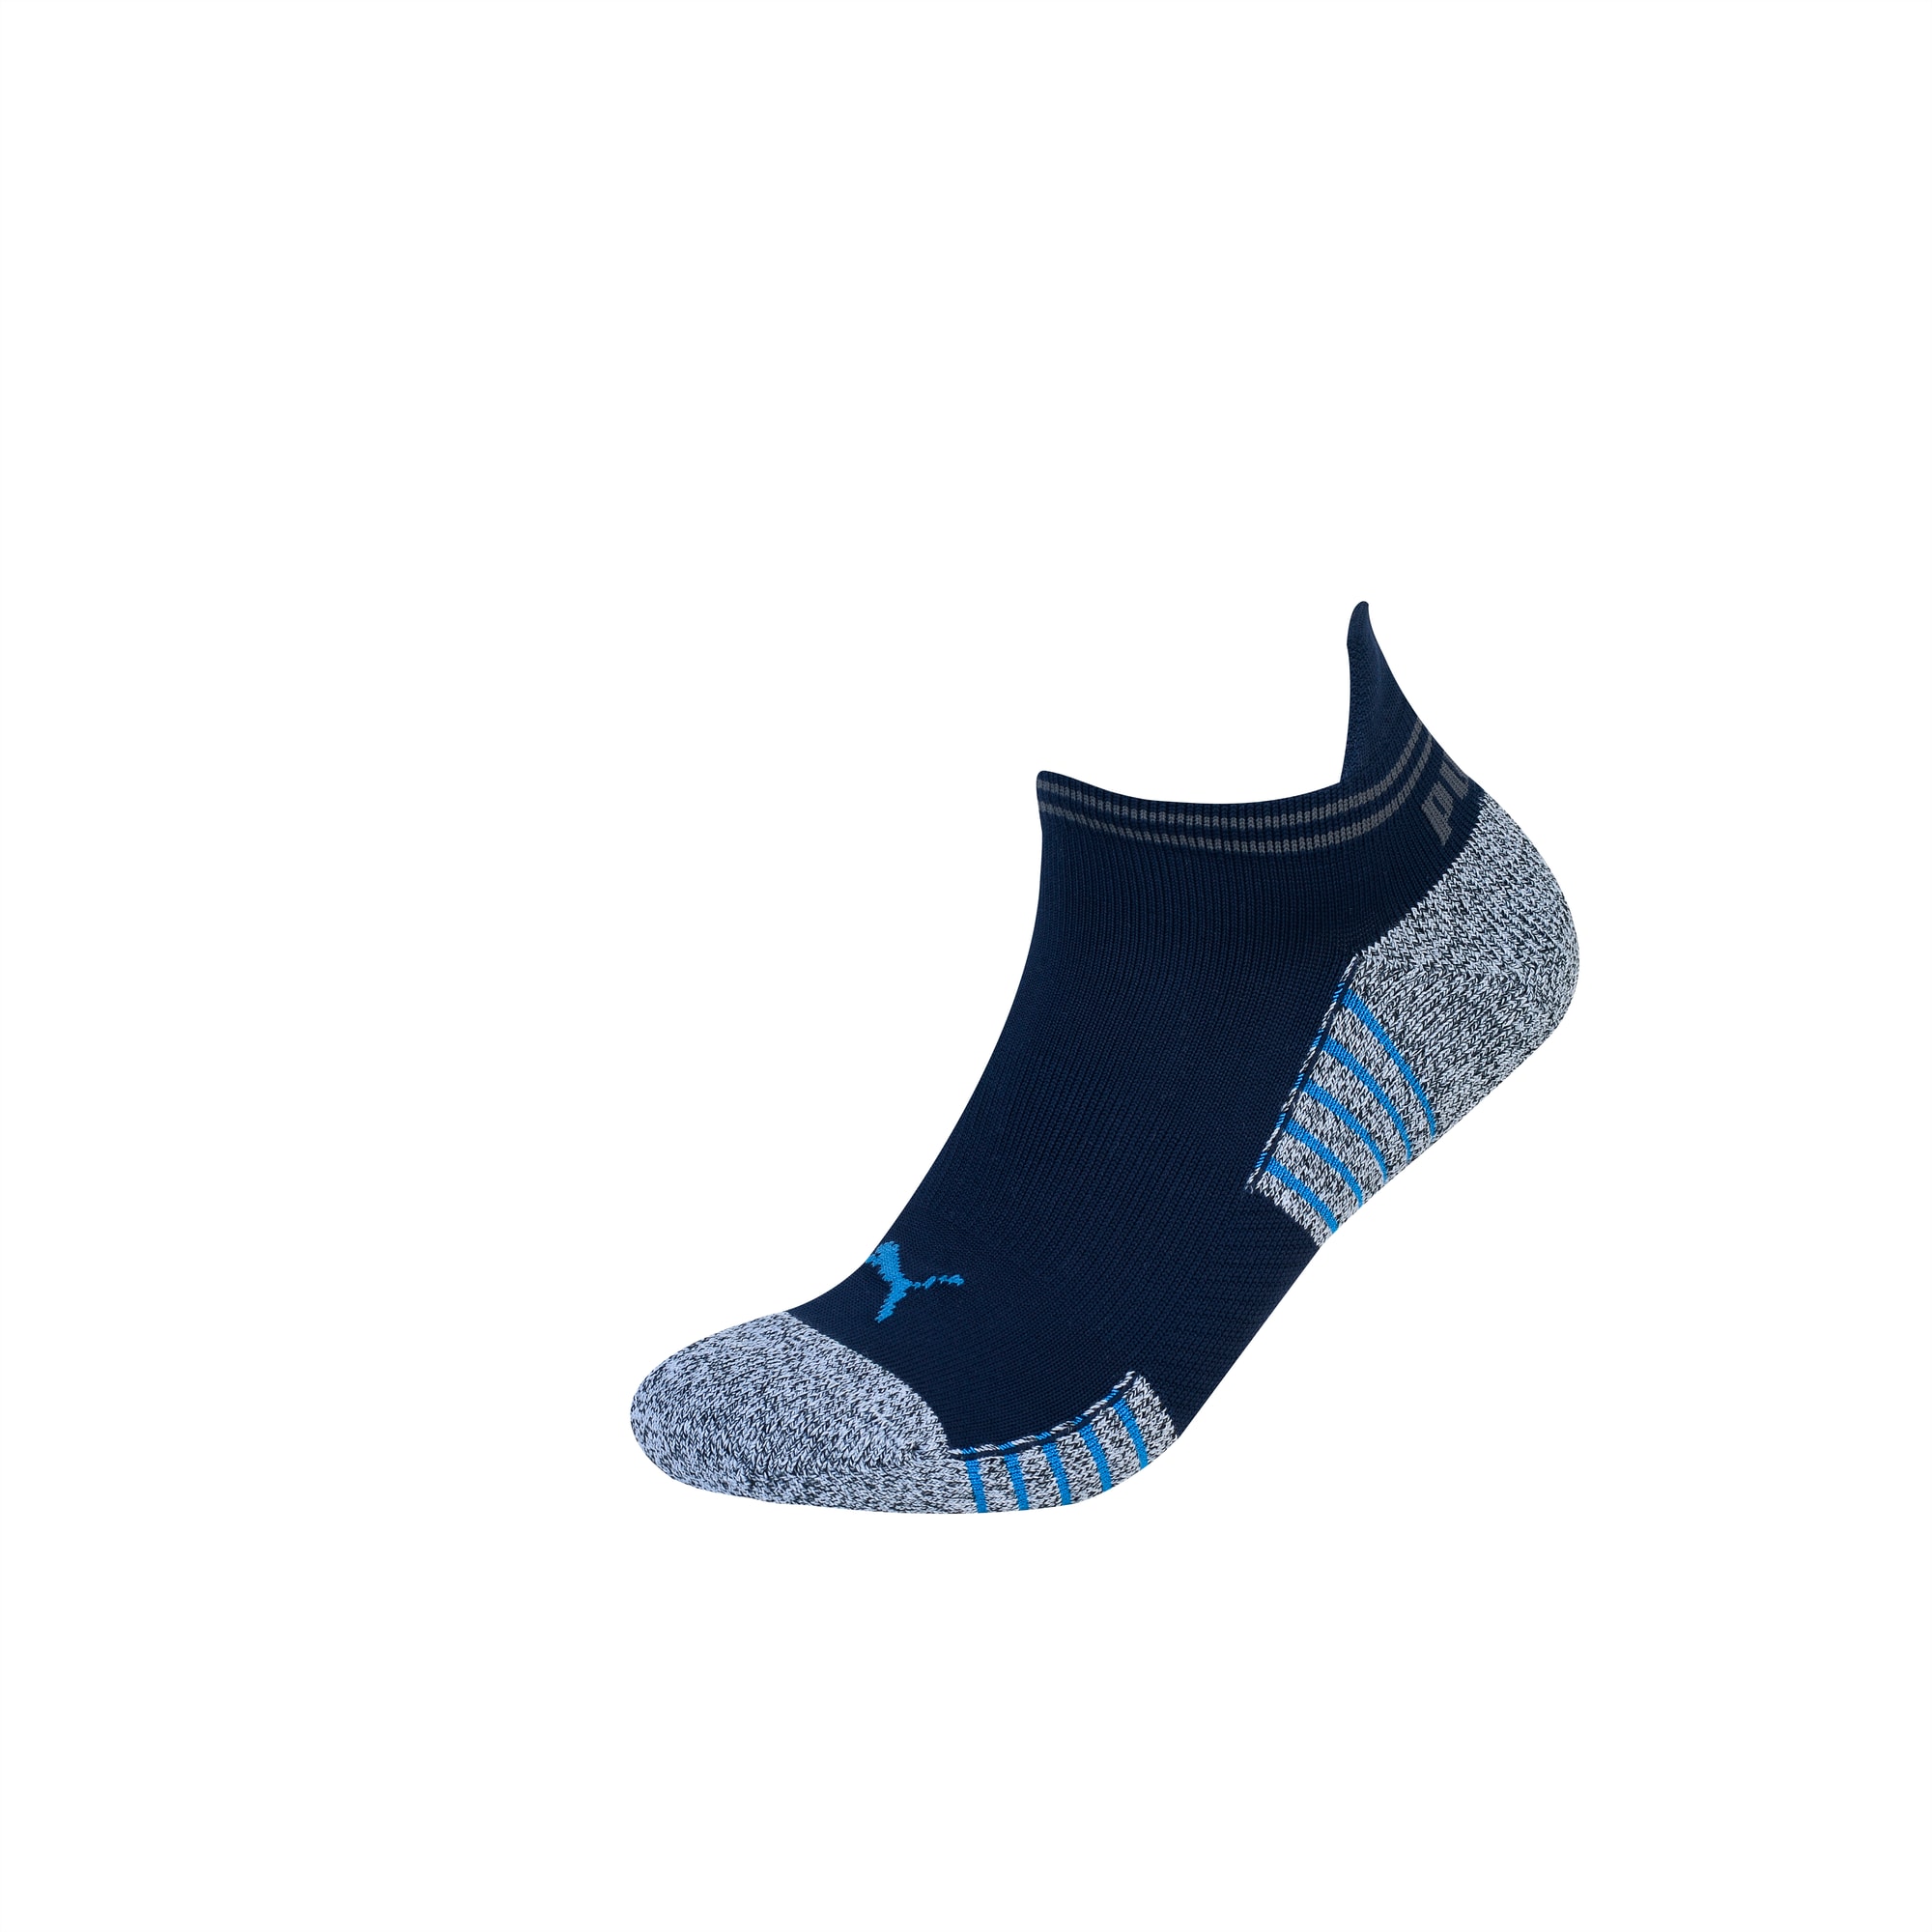 Basic Trainers Cushioned Socks, blue, large-SEA